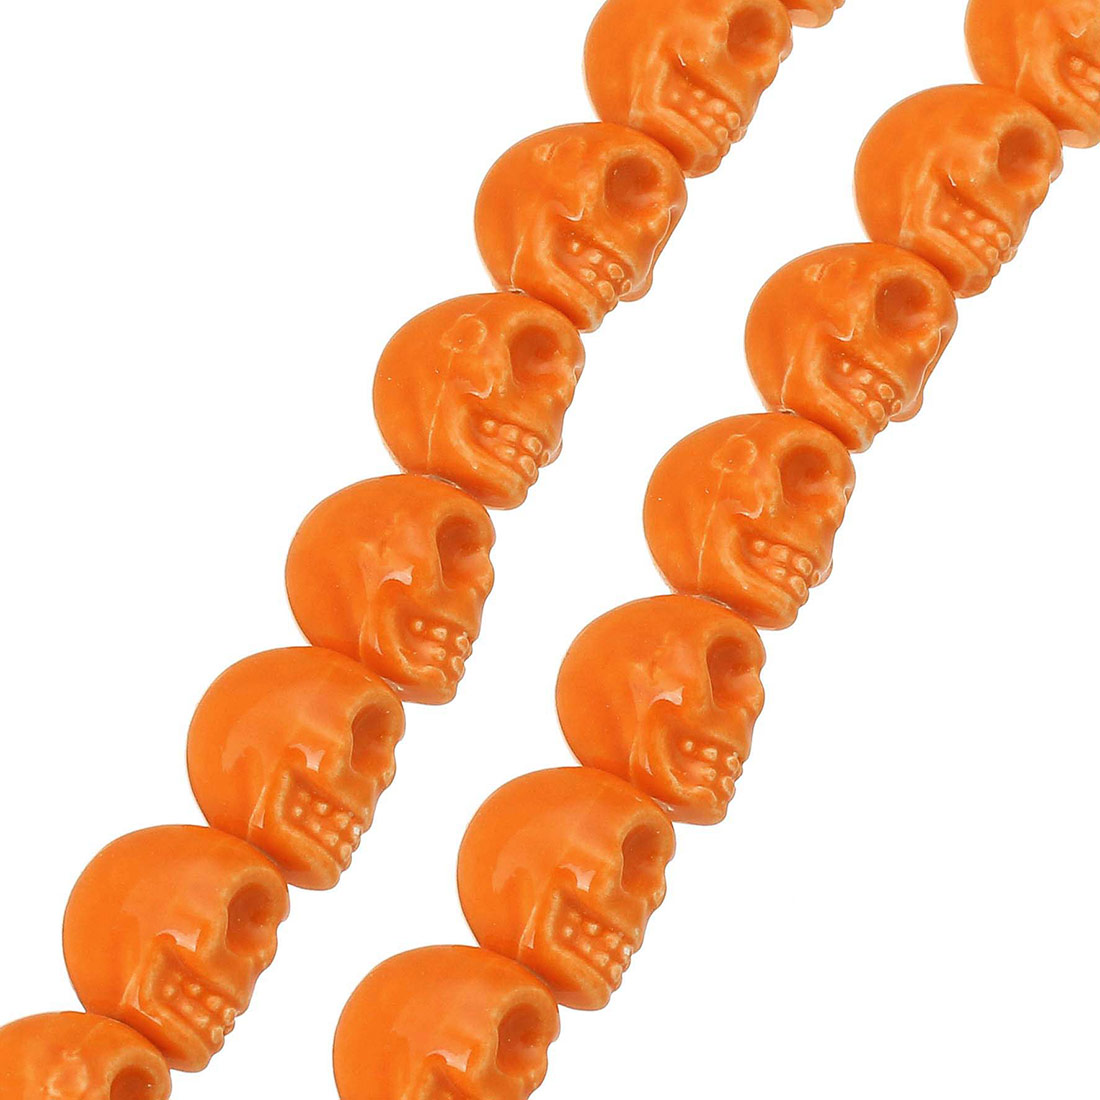  naranja